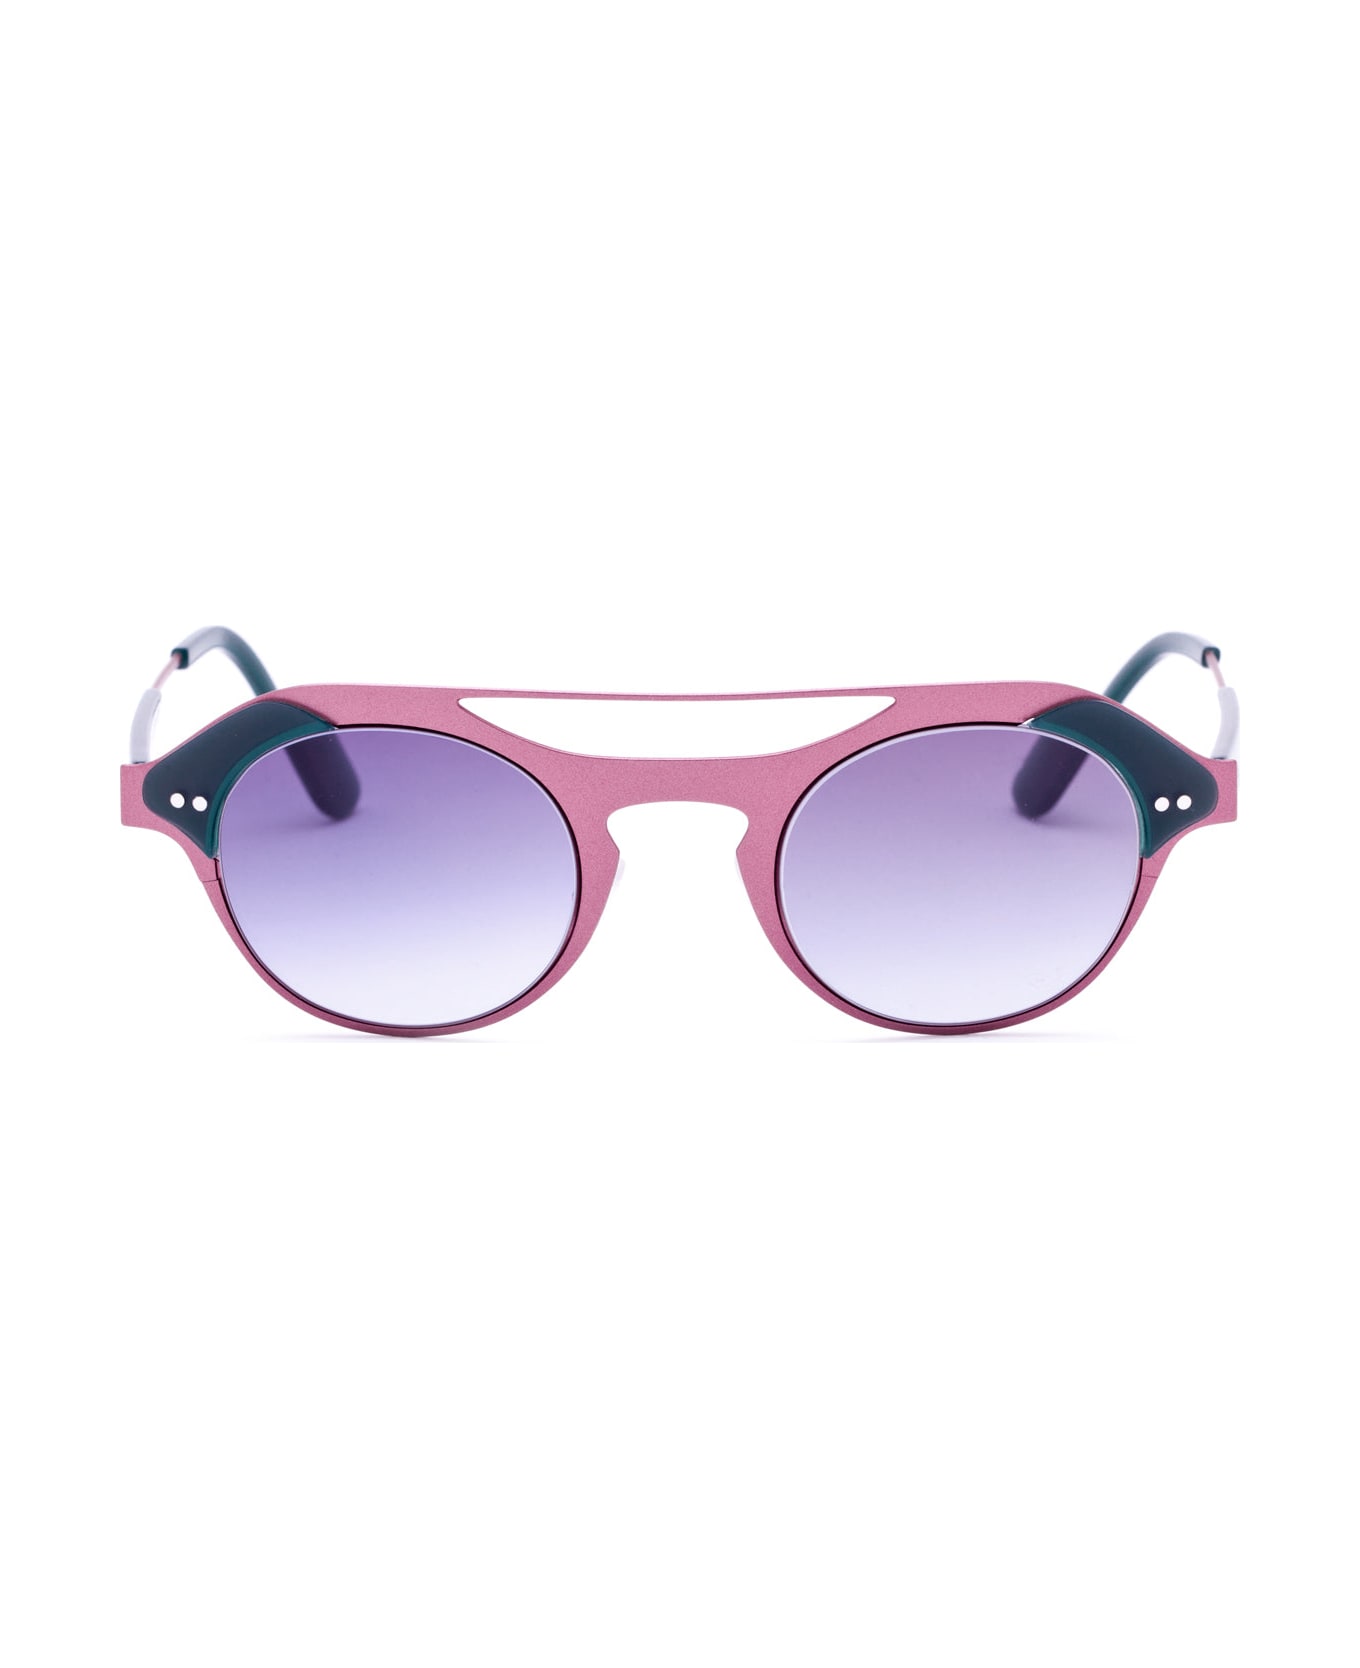 Anne & Valentin Stroke-u233 Sunglasses - pink